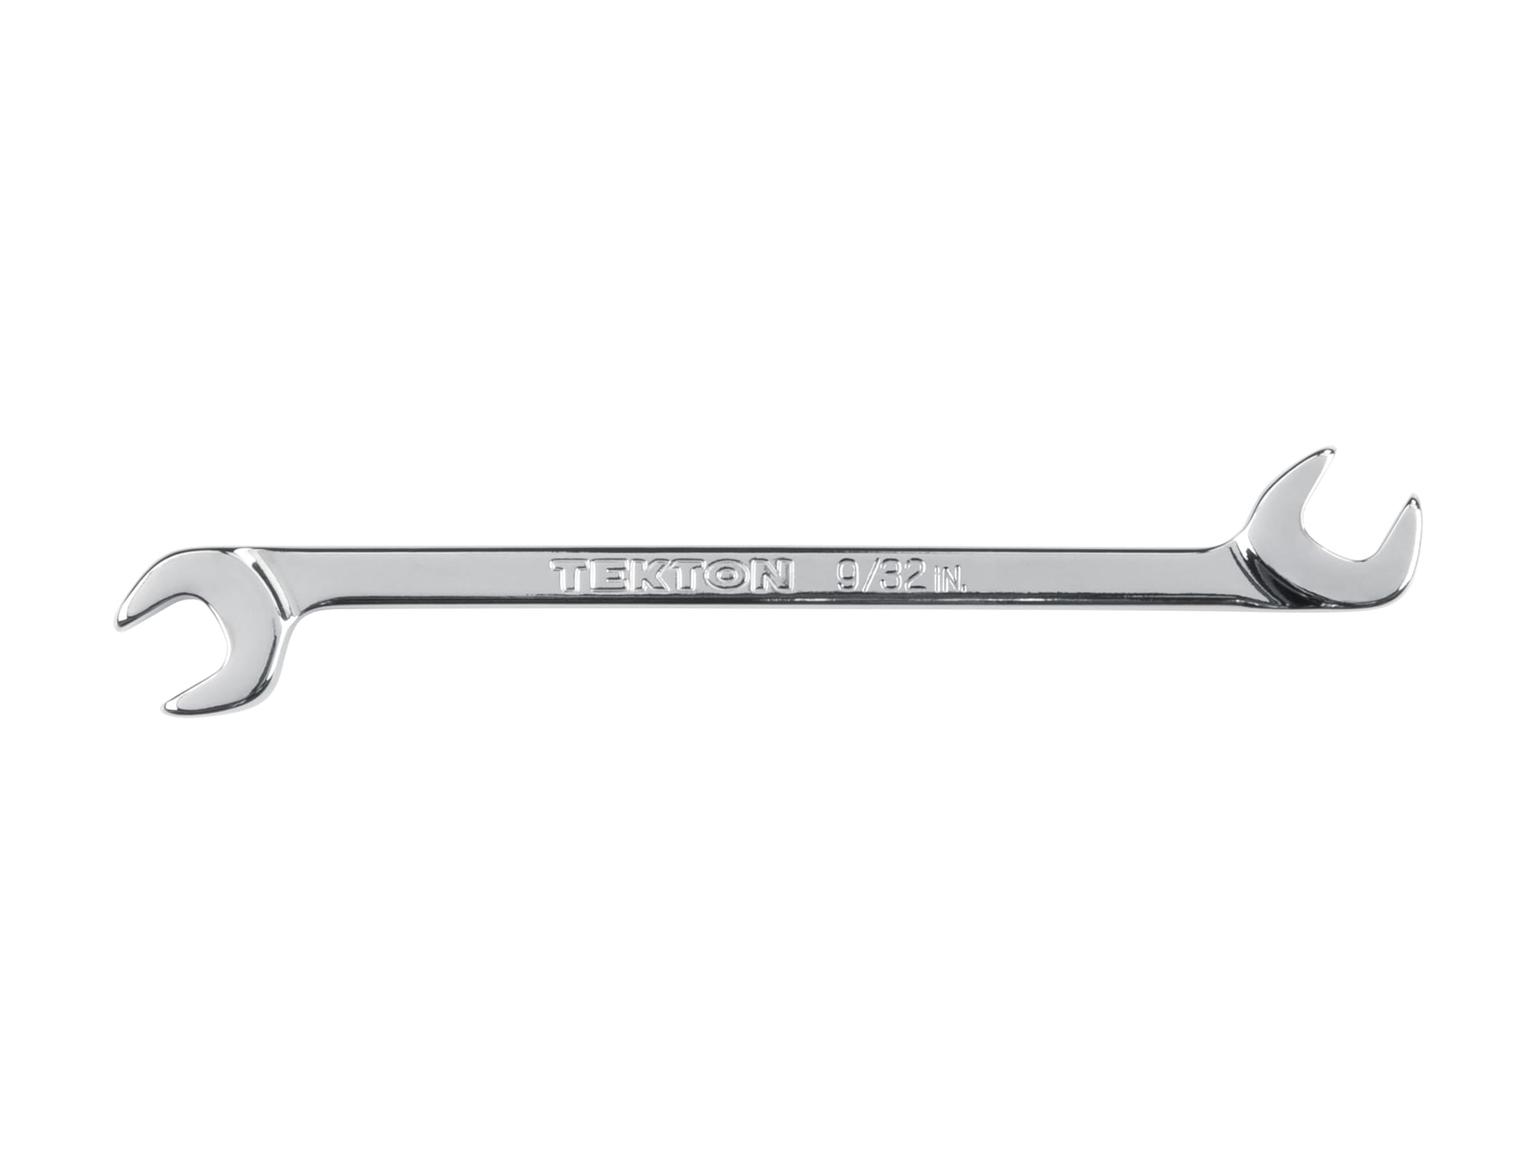 TEKTON WAE83007-T 9/32 Inch Angle Head Open End Wrench